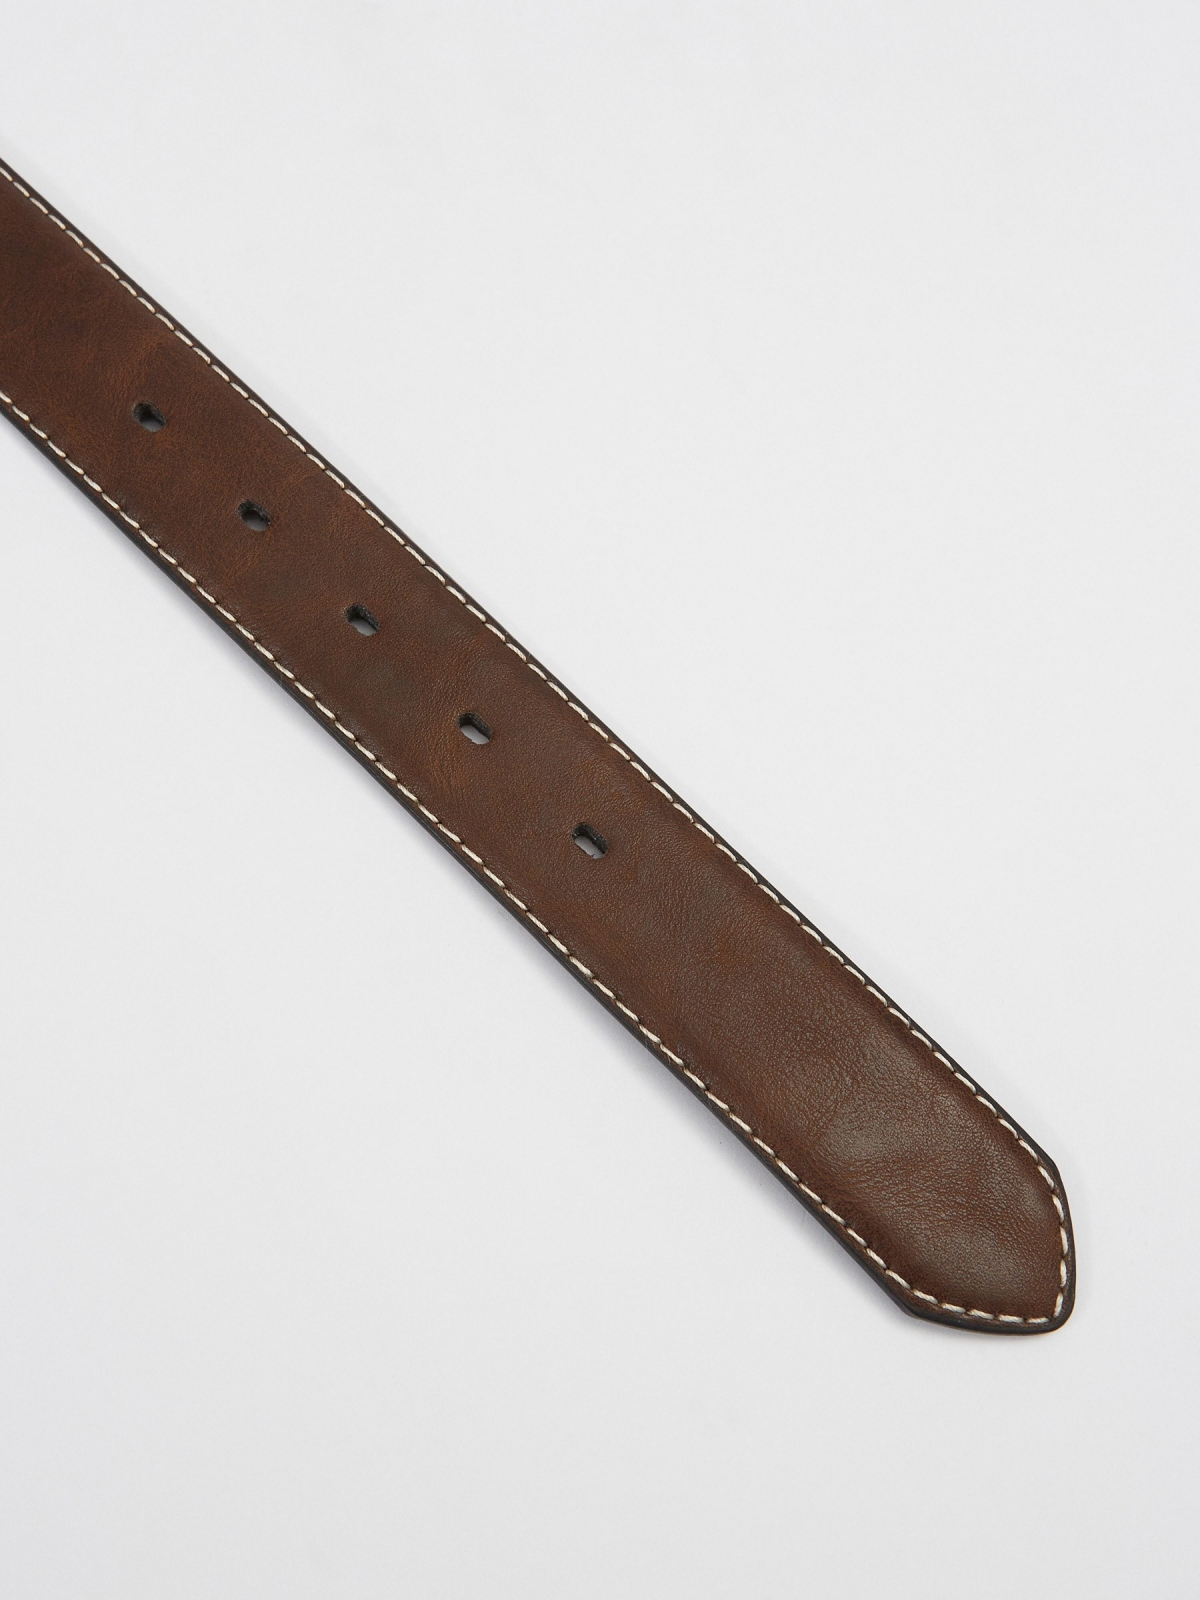 Stitching leather effect belt black